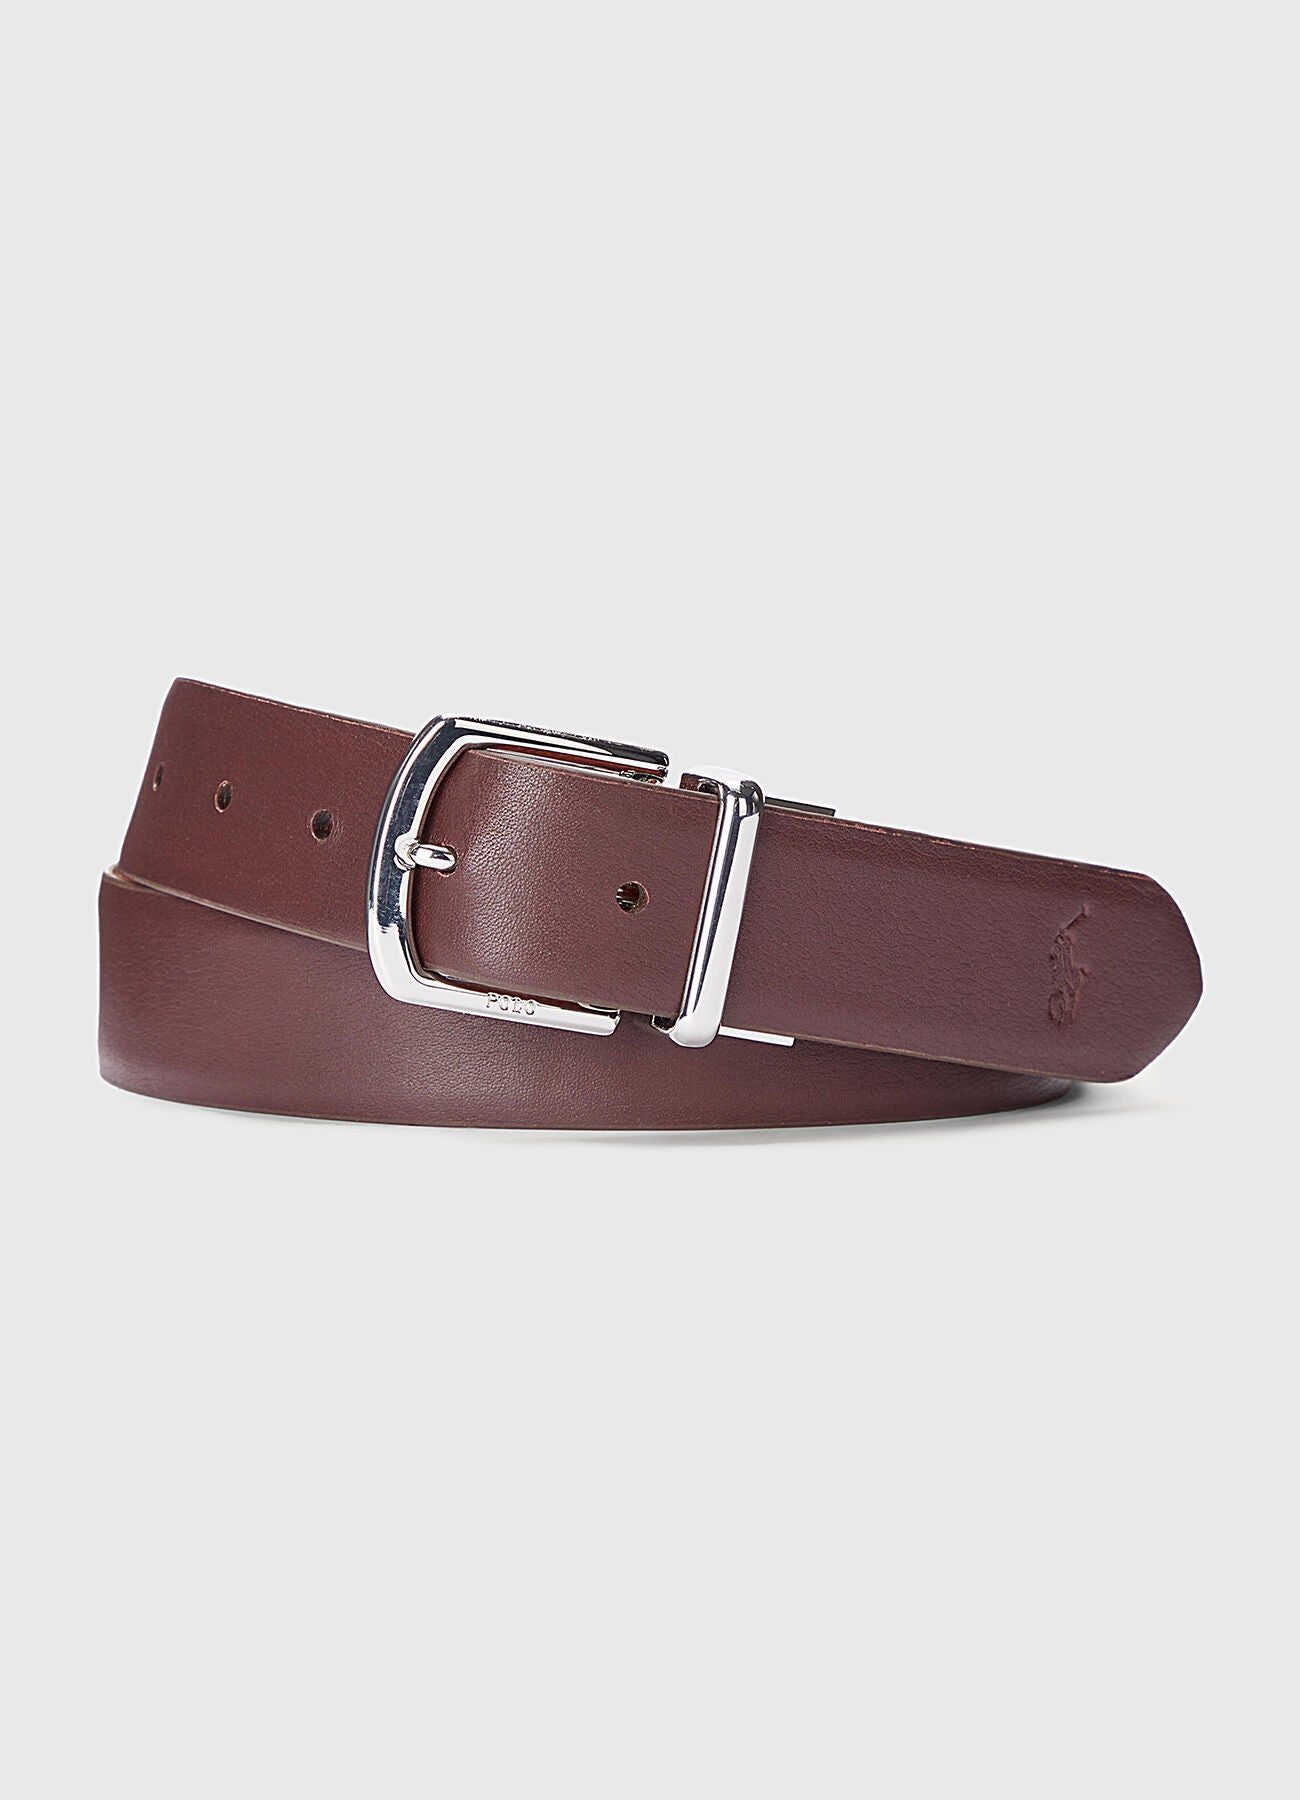 Ralph Lauren Reversible Pebble Leather Belt | Tan/Brown